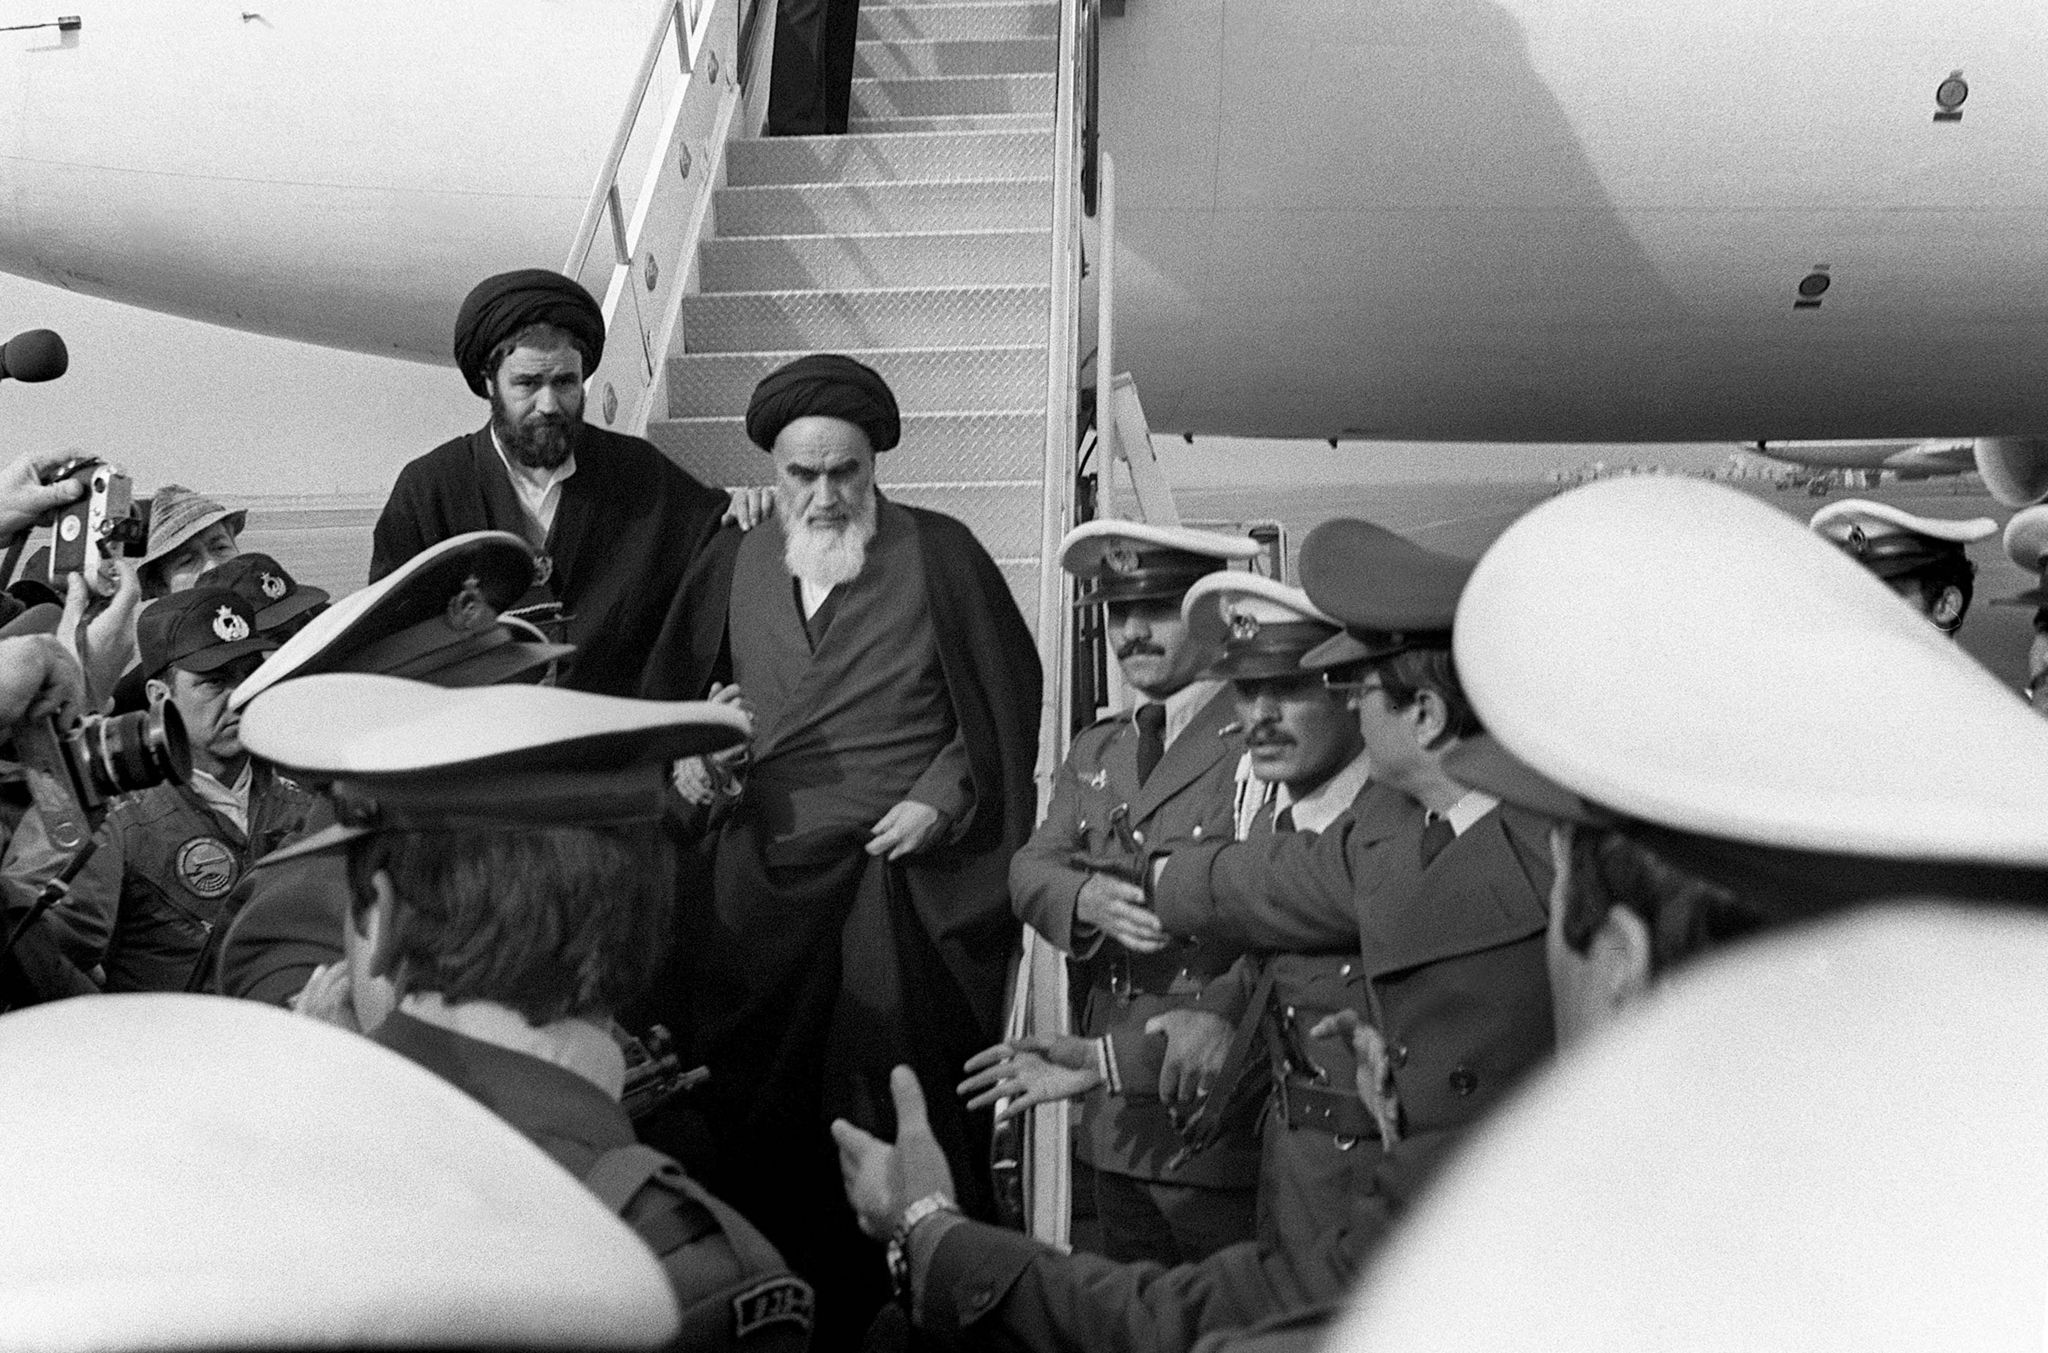 Leader of the Iranian revolution, Ayatollah Khomeini